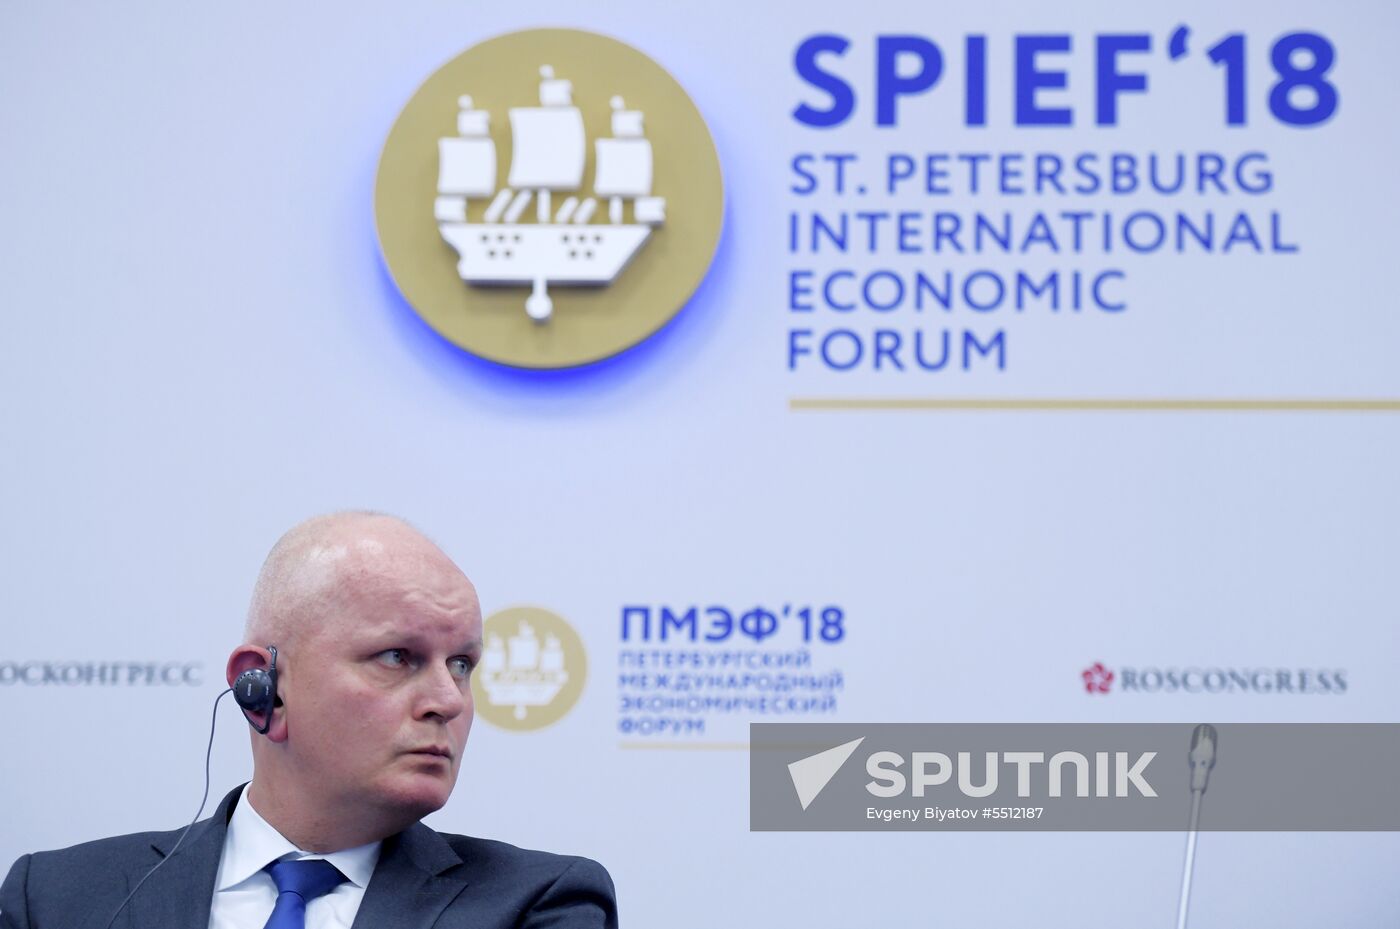 St. Petersburg International Economic Forum. Day two